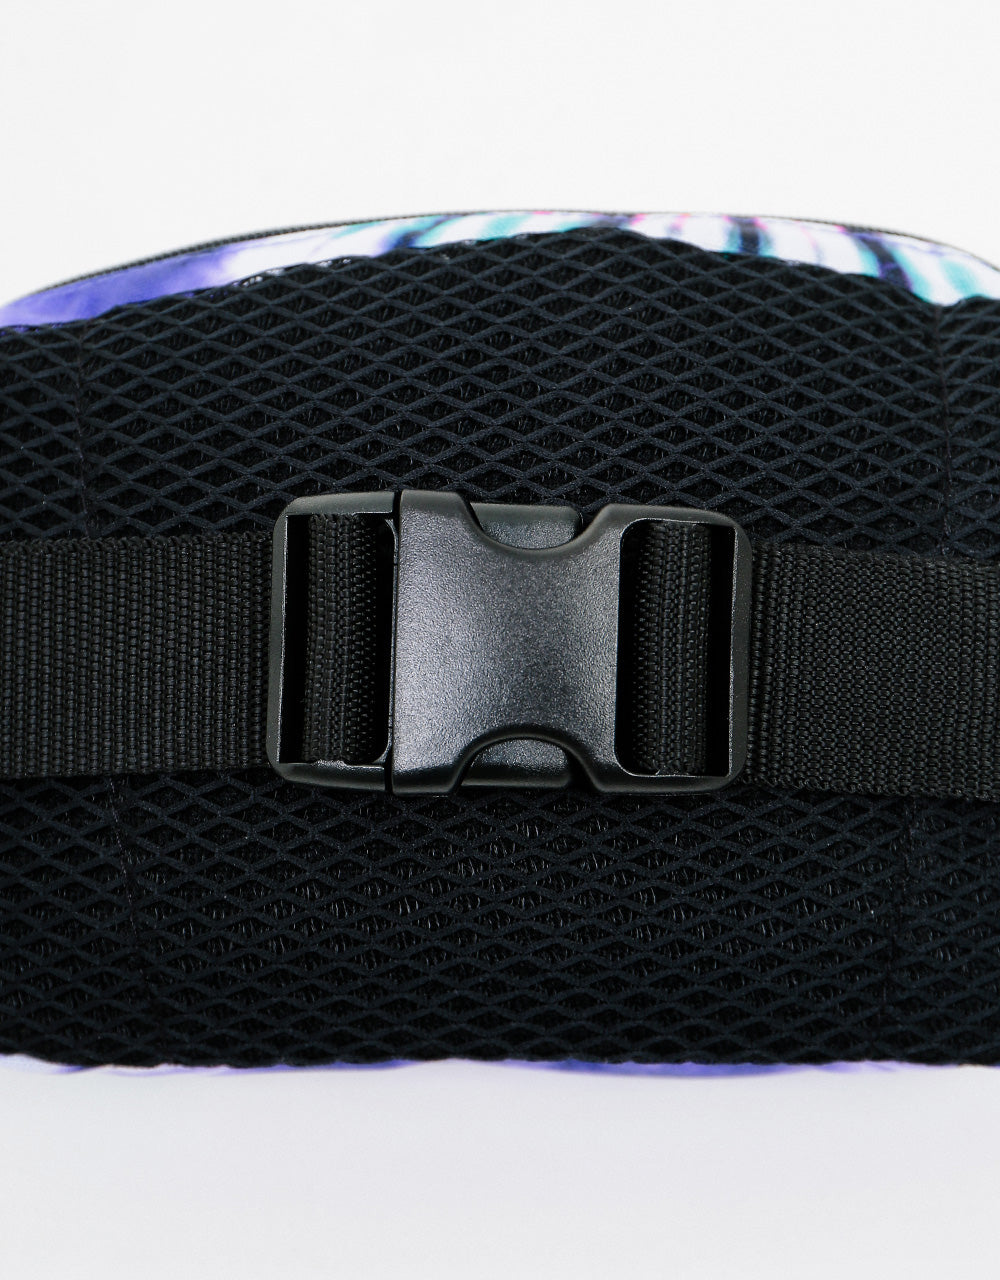 Vans Aliso II Cross Body Bag - New Age Purple Tie Dye